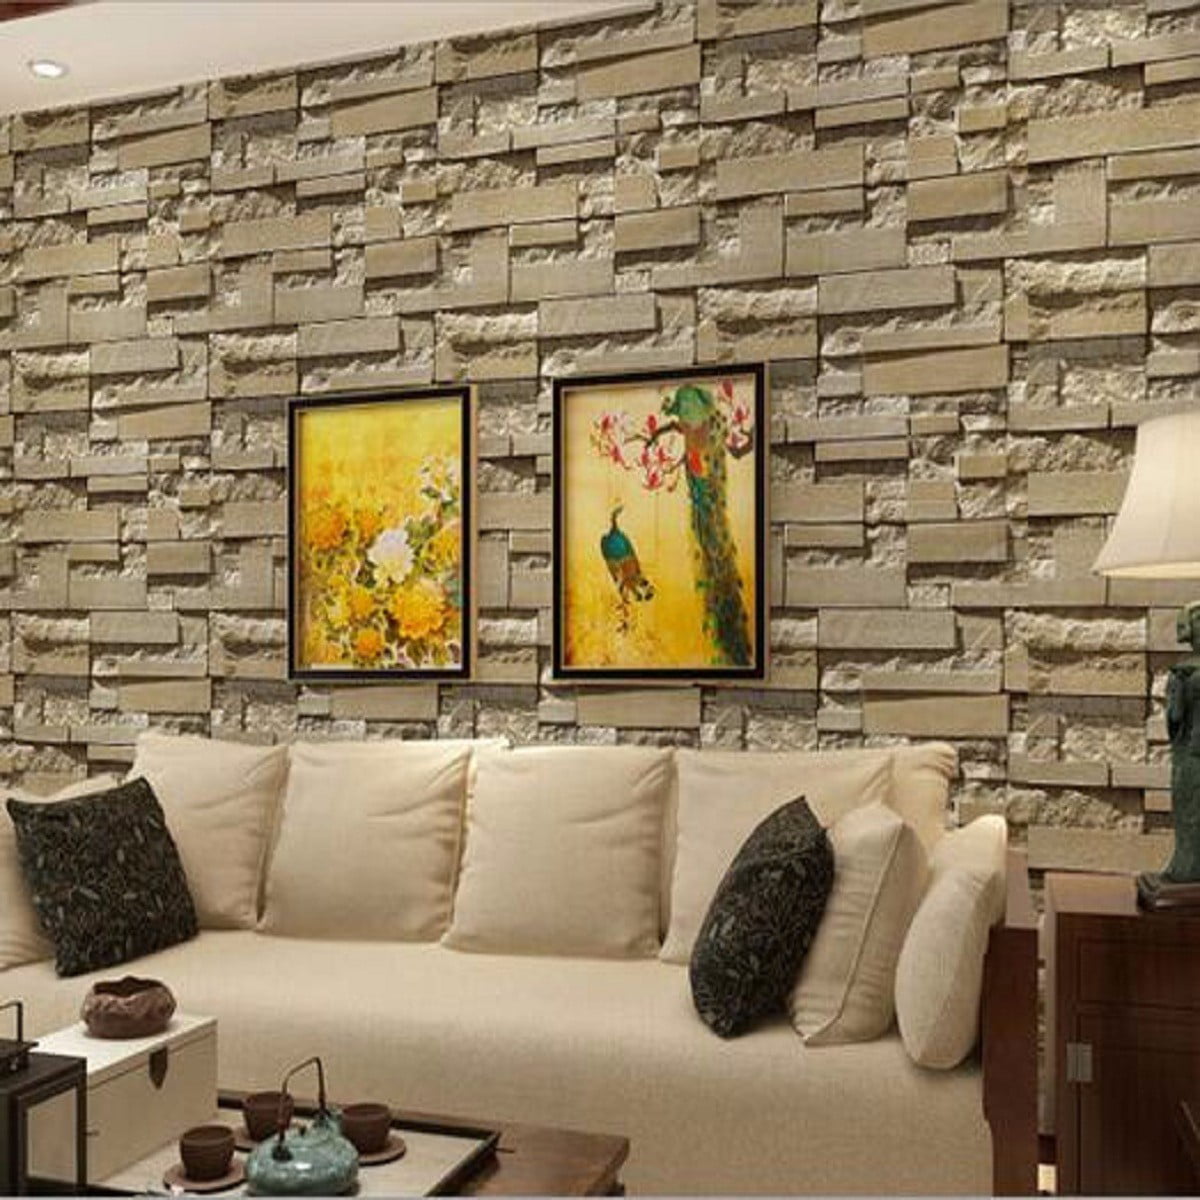 3D 10M Wallpaper Bedroom Mural Roll Modern Stone Brick Wall Background